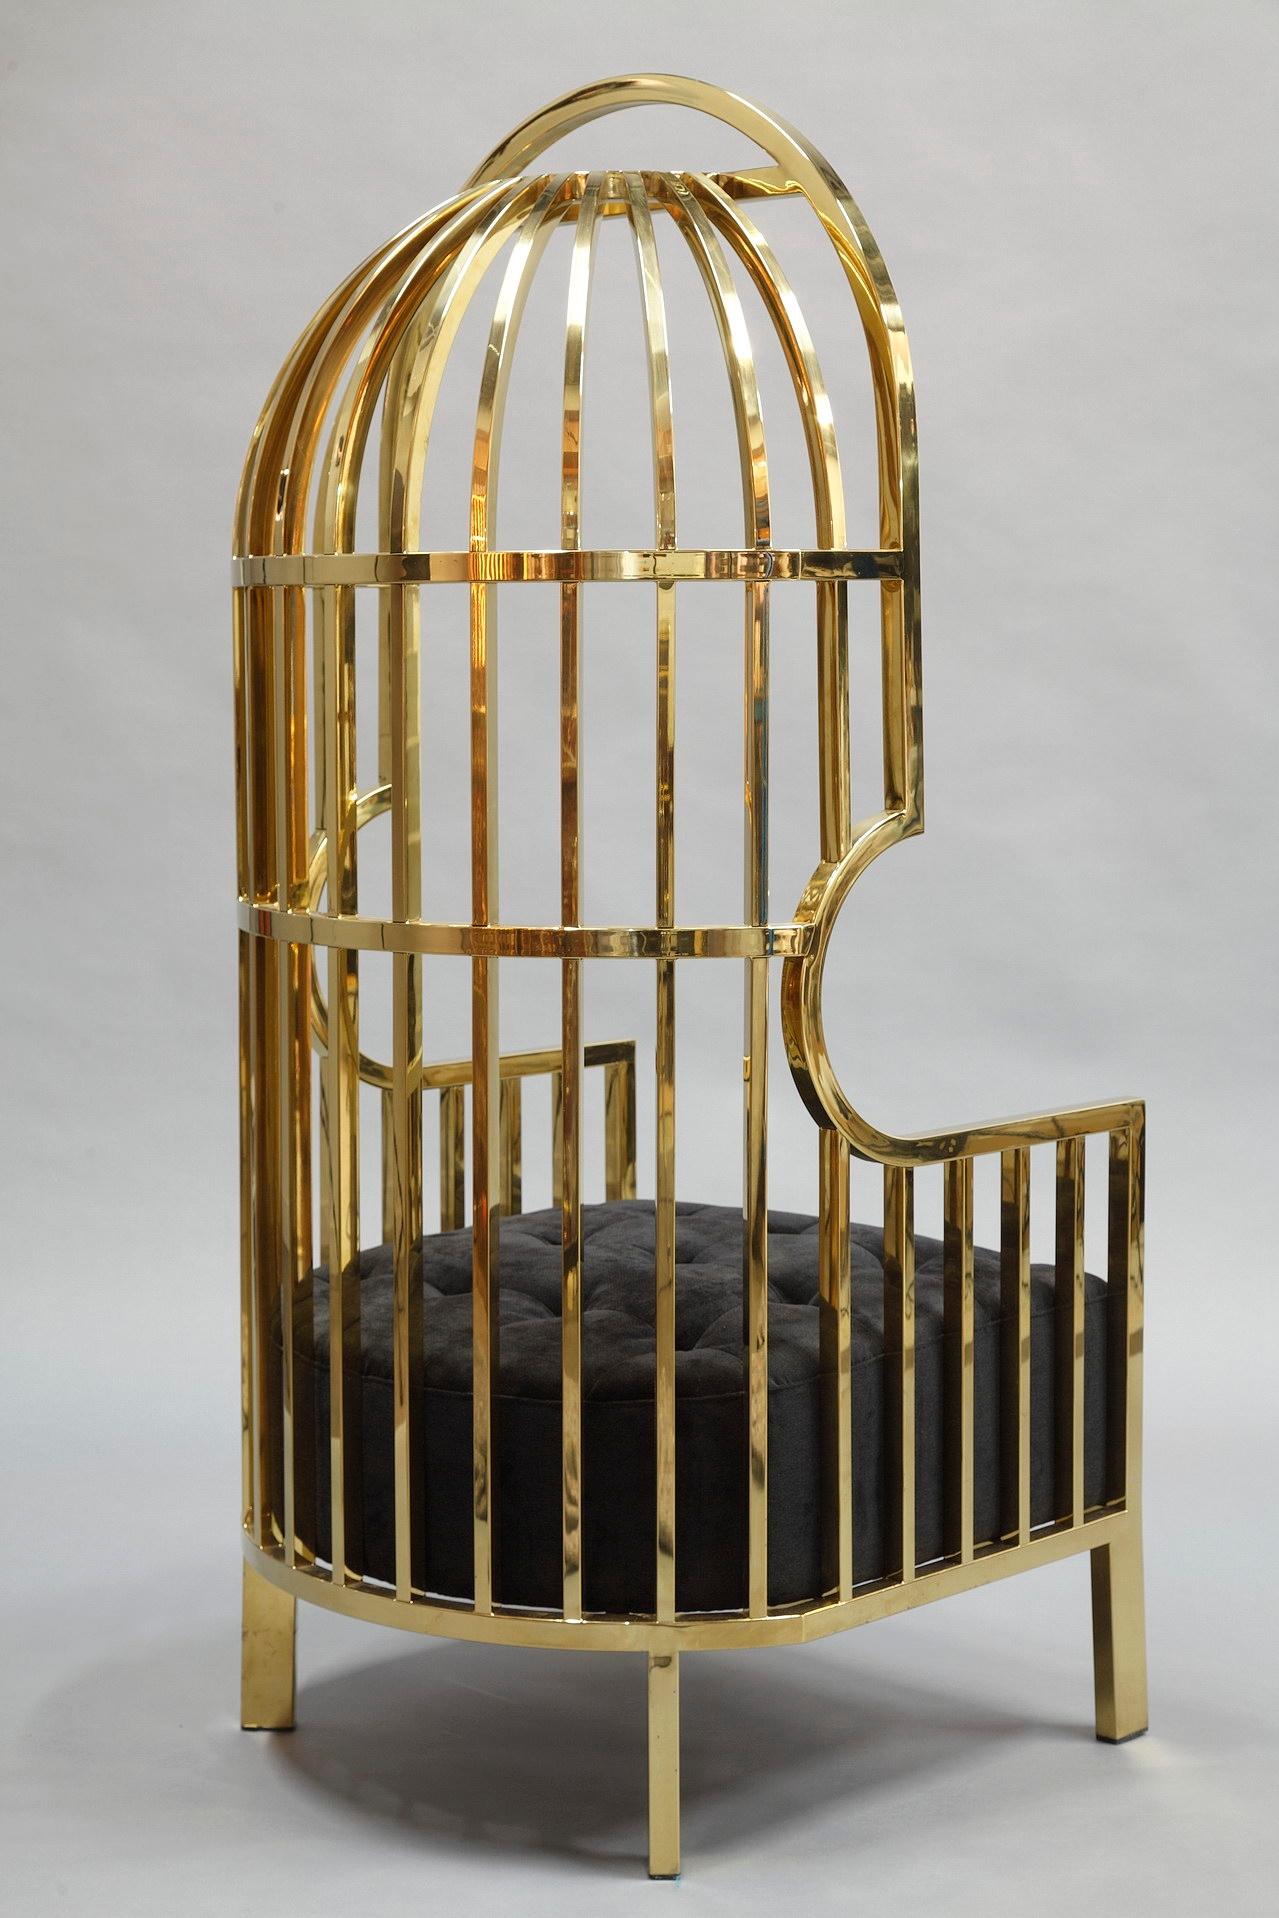 20th Century Eichholtz Bora Bora Birdcage Chairs, Gold